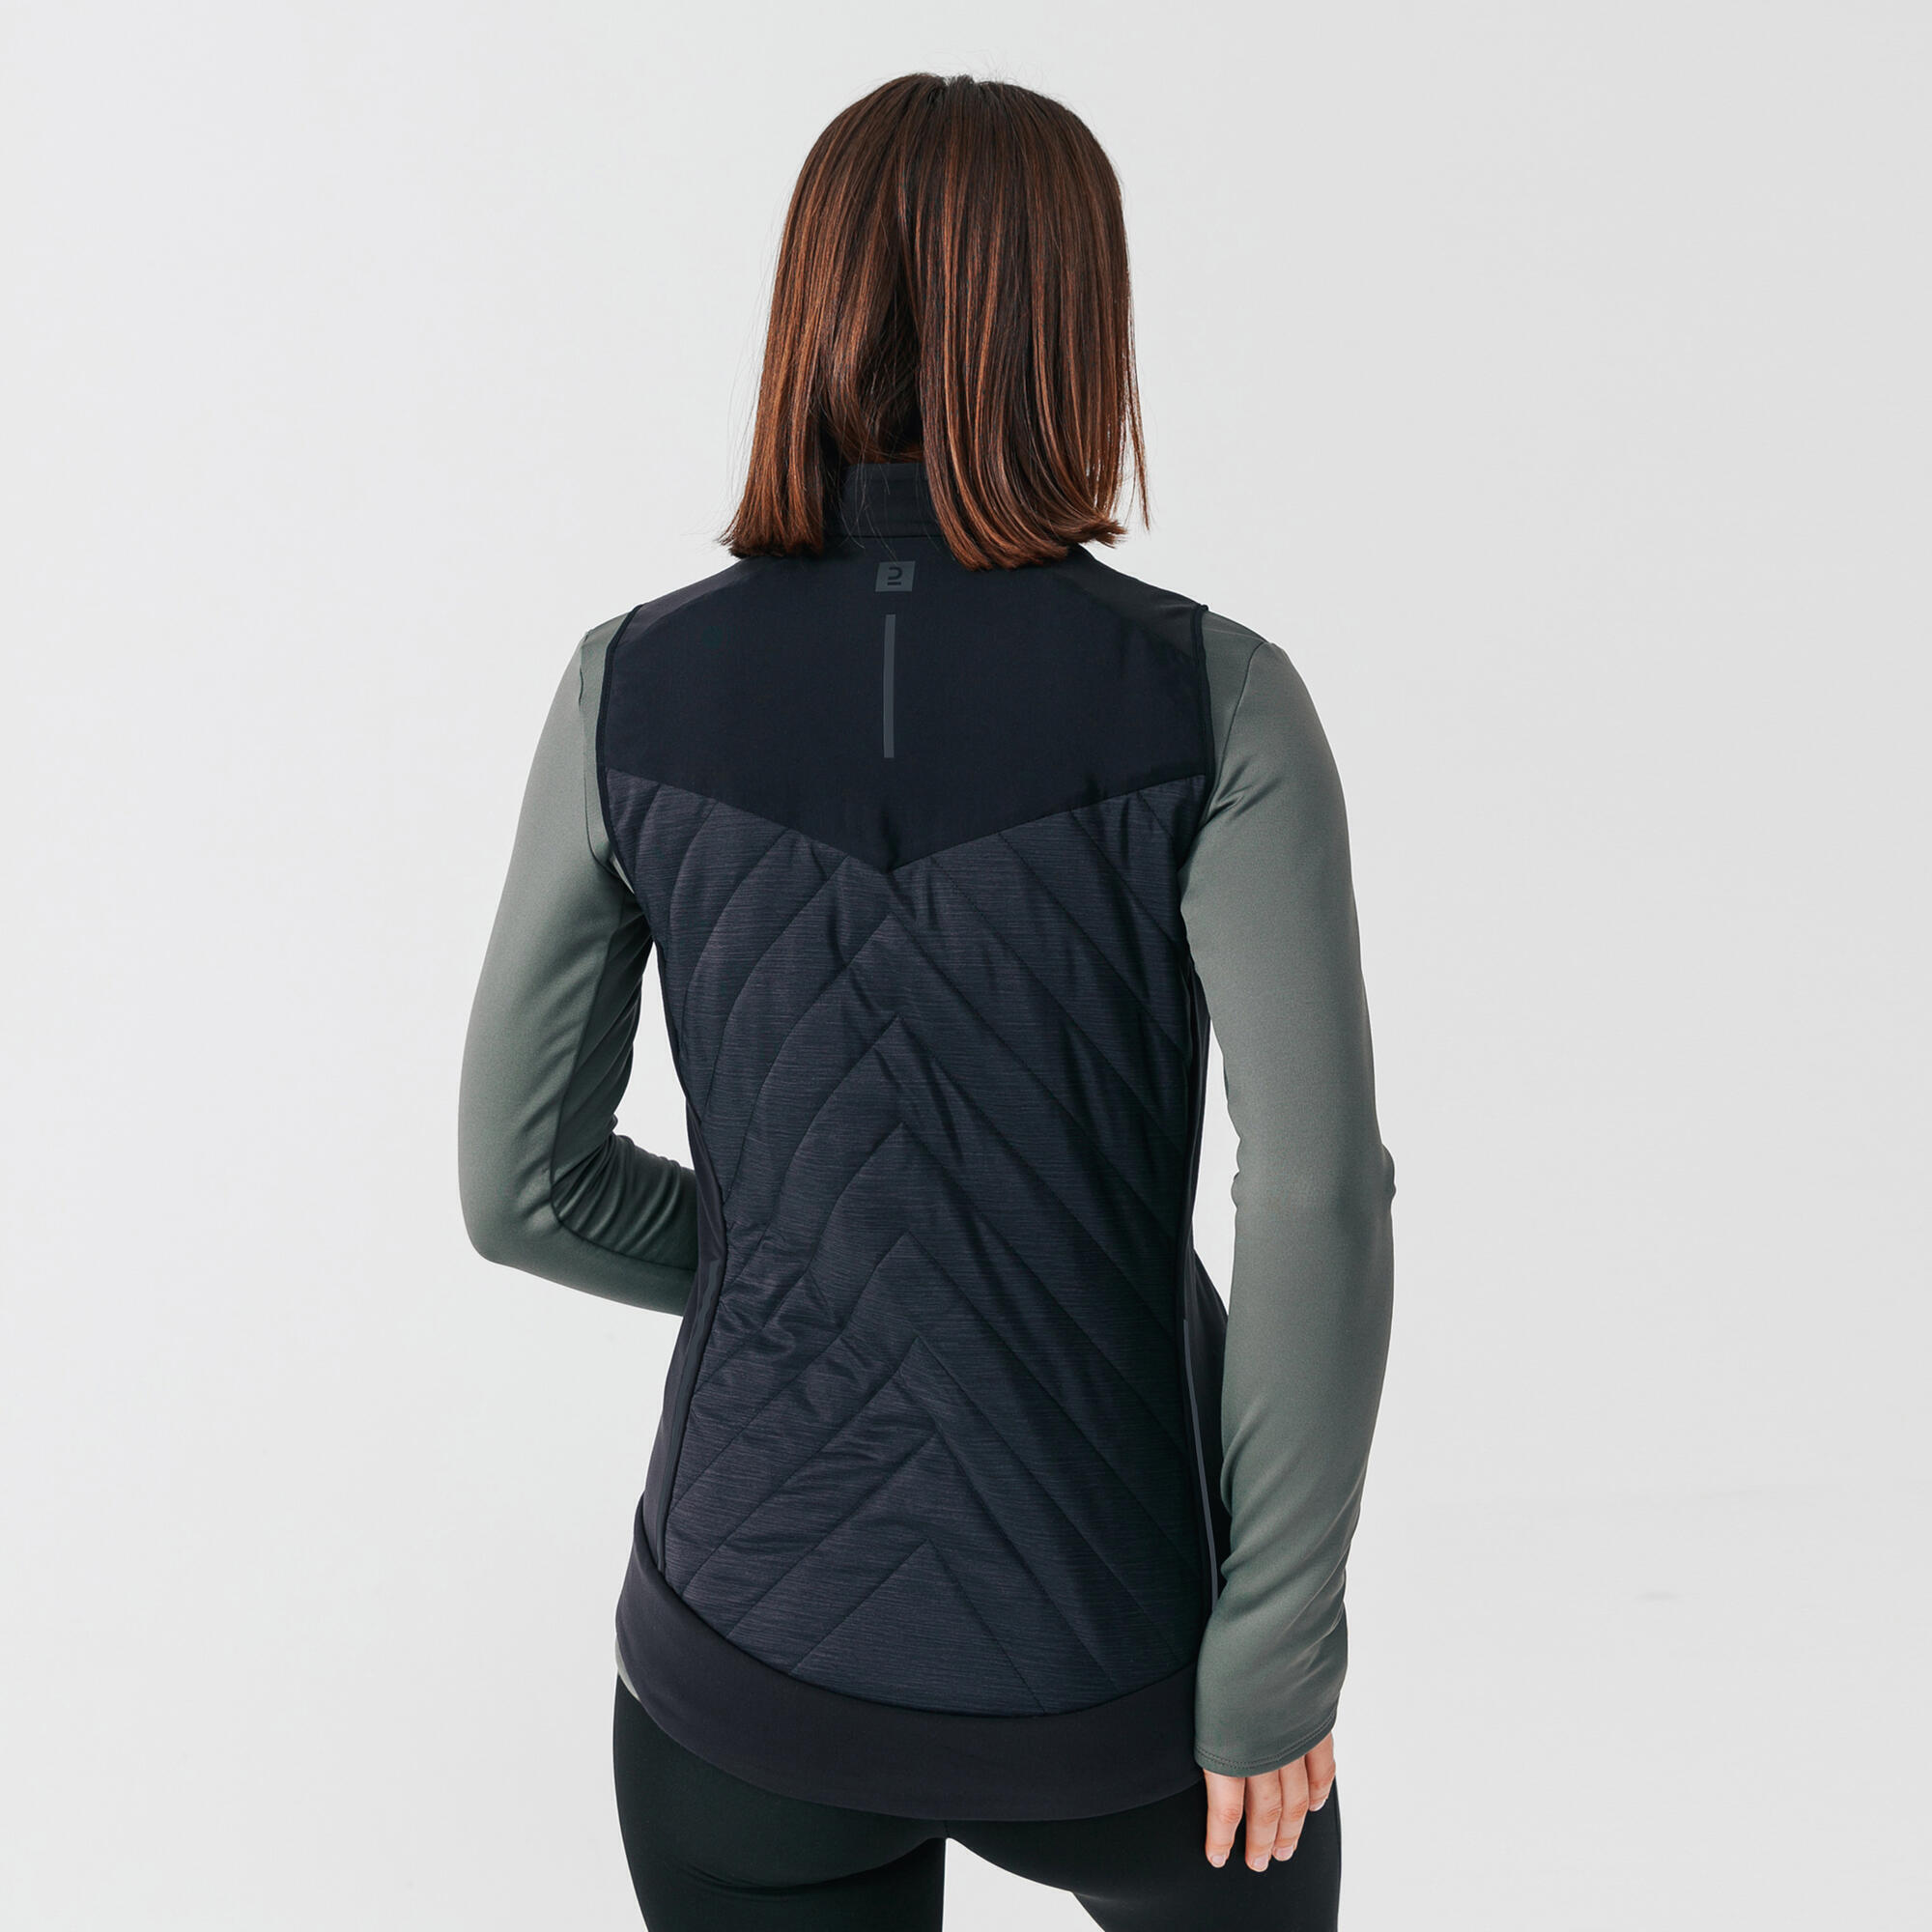 Women's sleeveless running jacket Warm - black 2/7